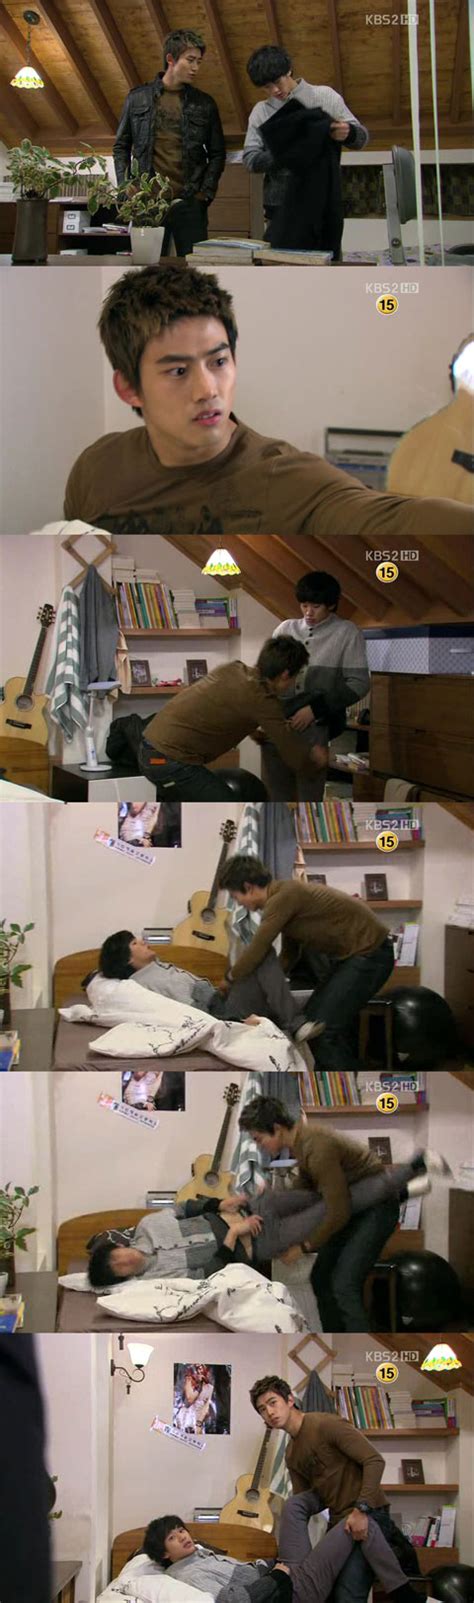 [Spoiler] "Dream High" Kim Soo-hyun - Tacyeon giddy bed scene 'Take it off VS Oh my don't do ...